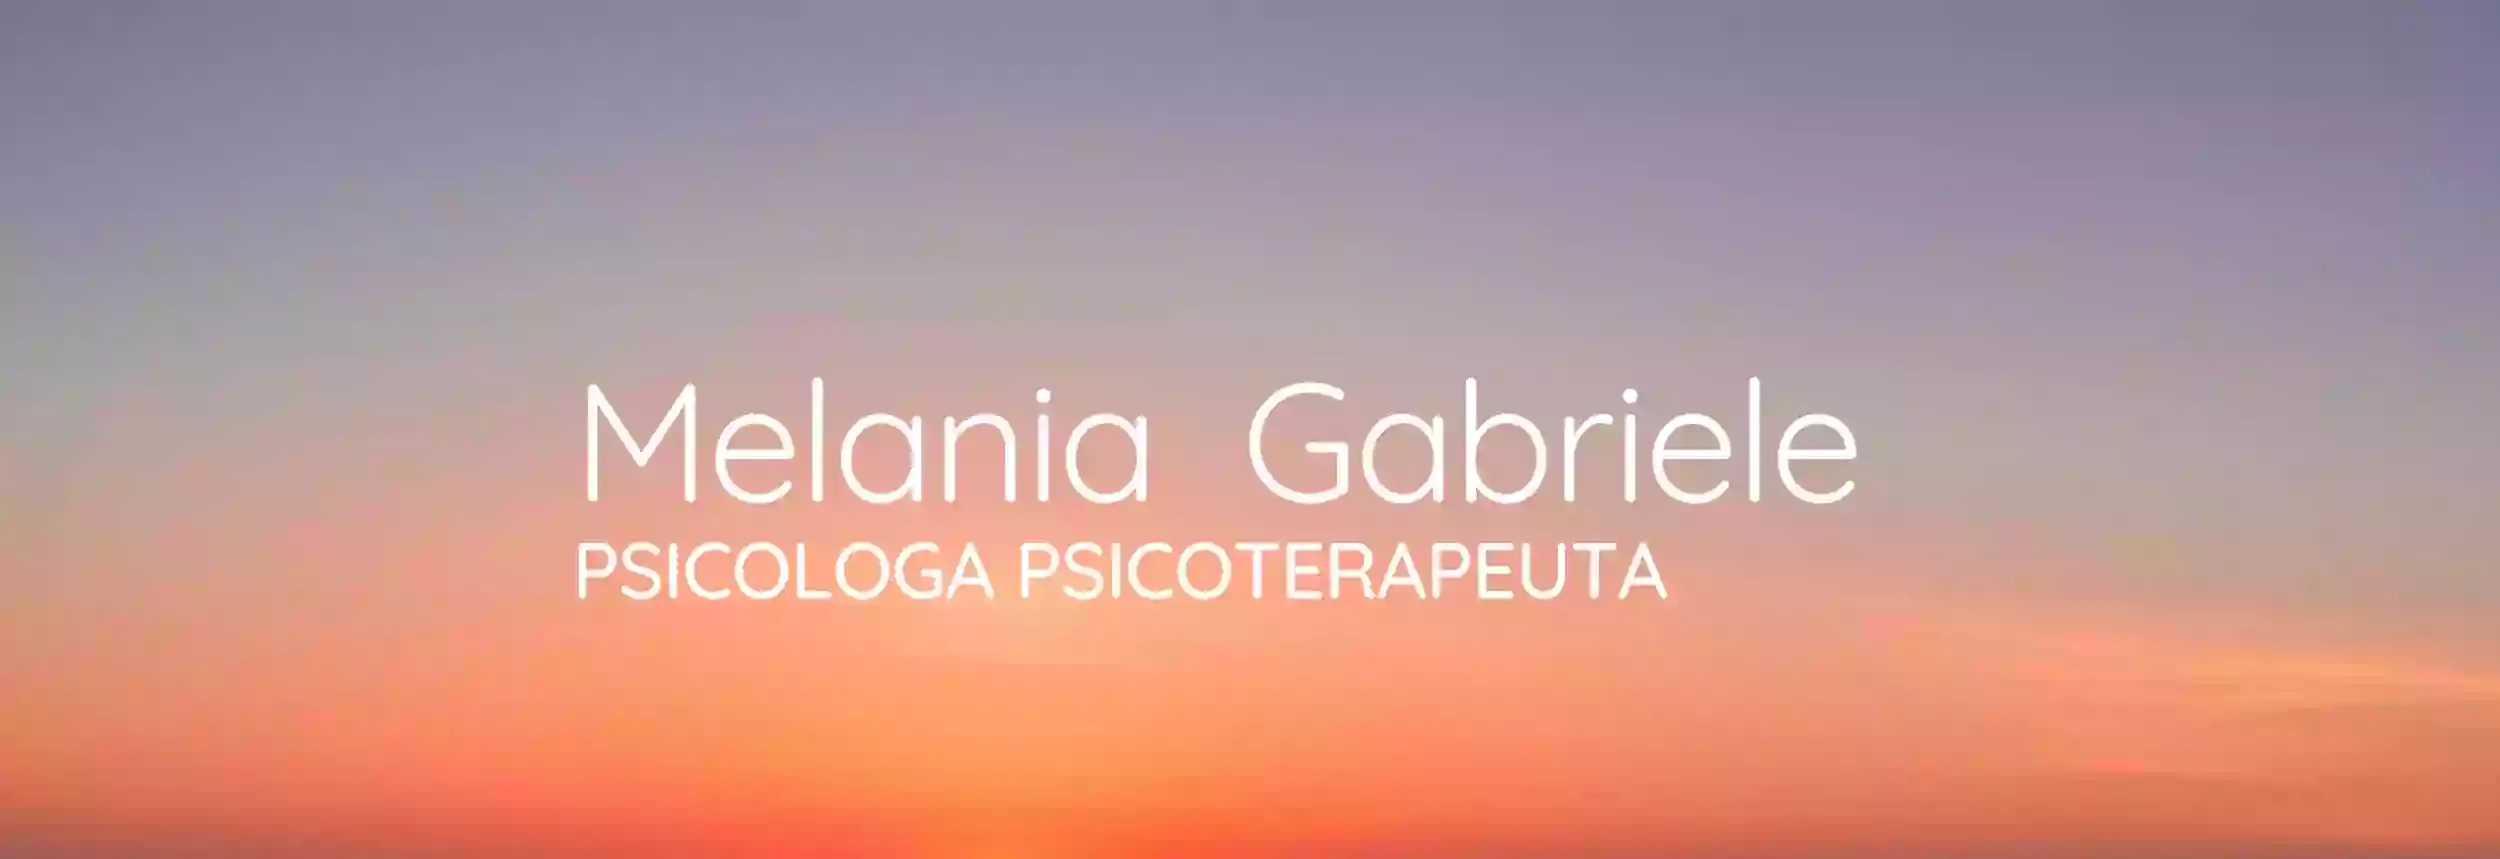 Melania Gabriele Psicologa Psicoterapeuta Firenze